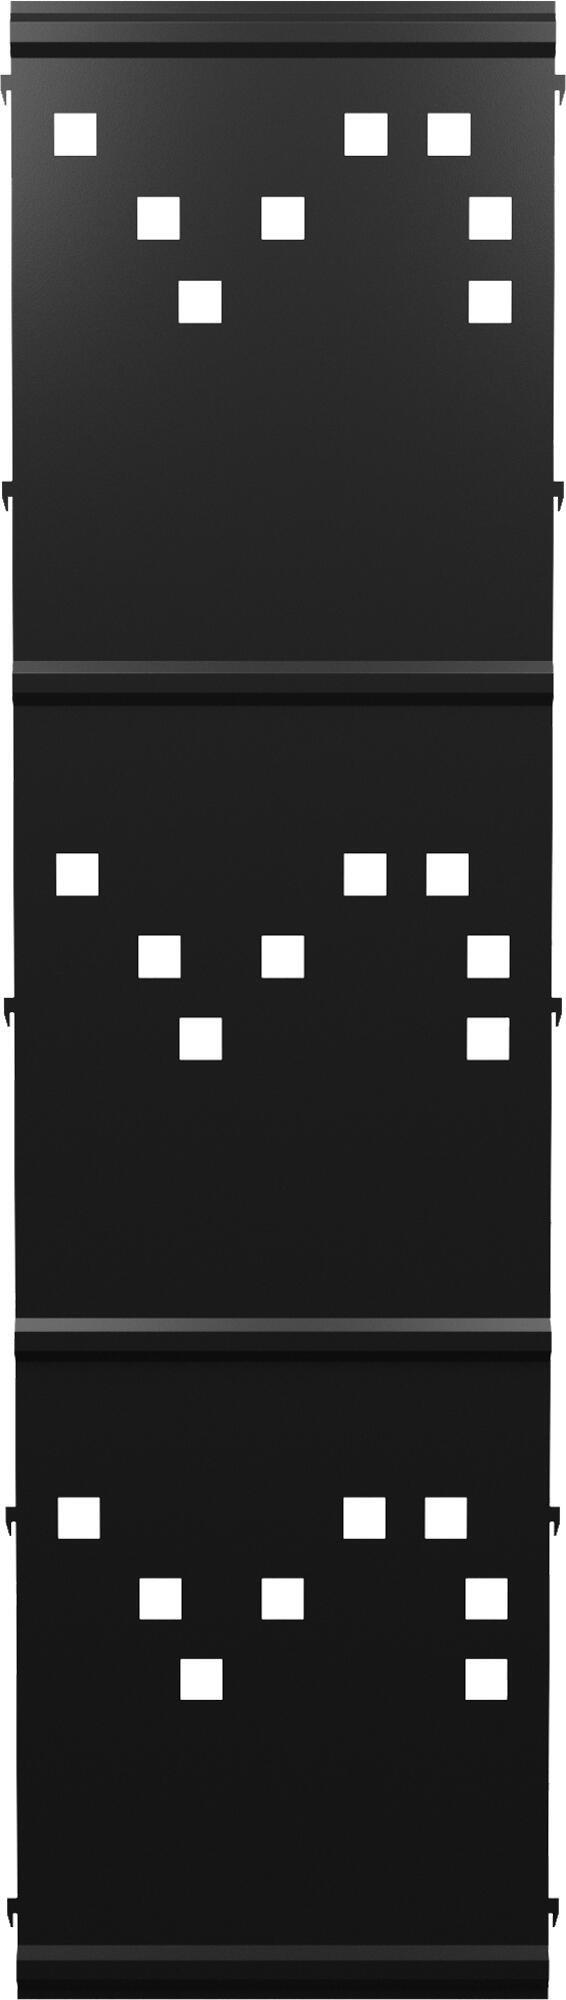 Panel remate valla acero galvanizado franja cuadros negro 194x52,5 cm